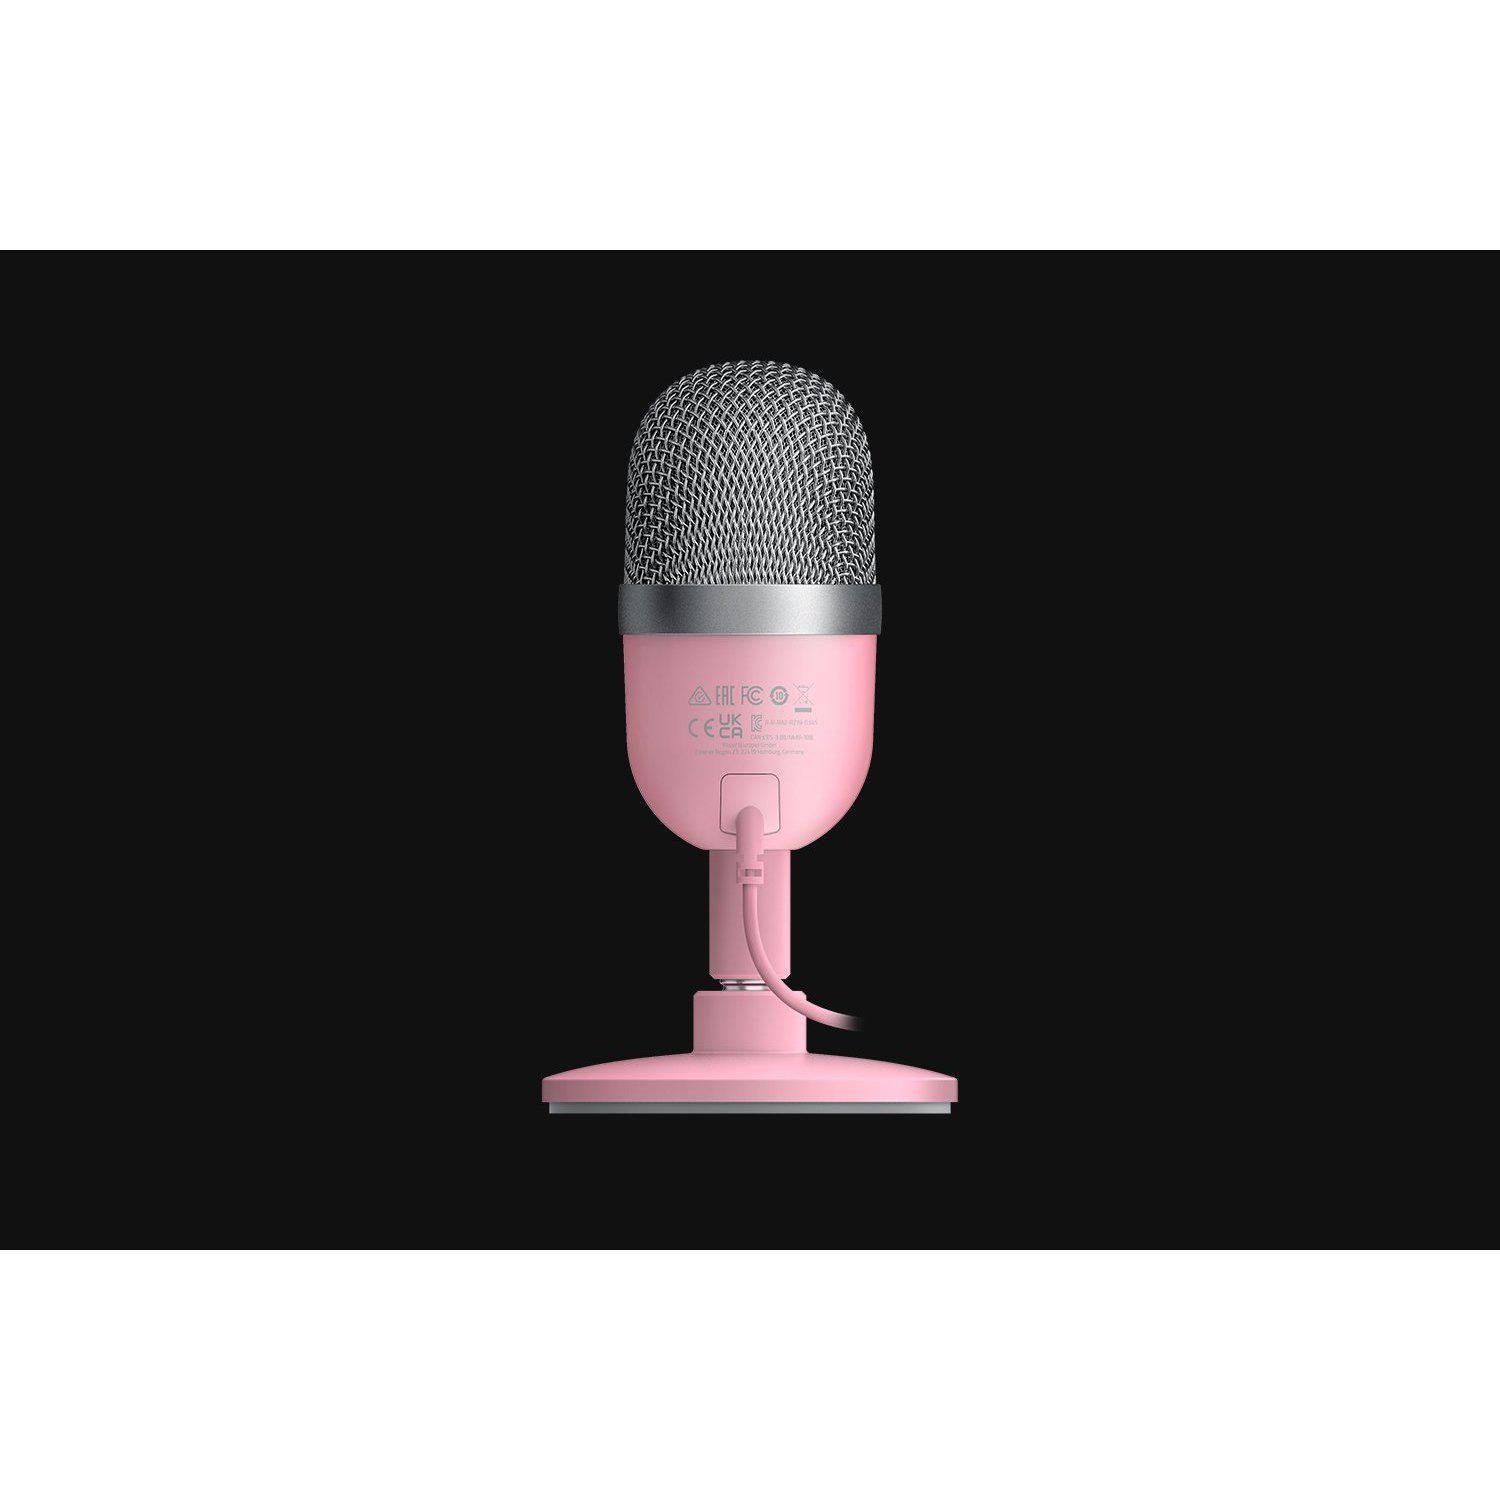 Razer Seiren Mini Microphone, PC